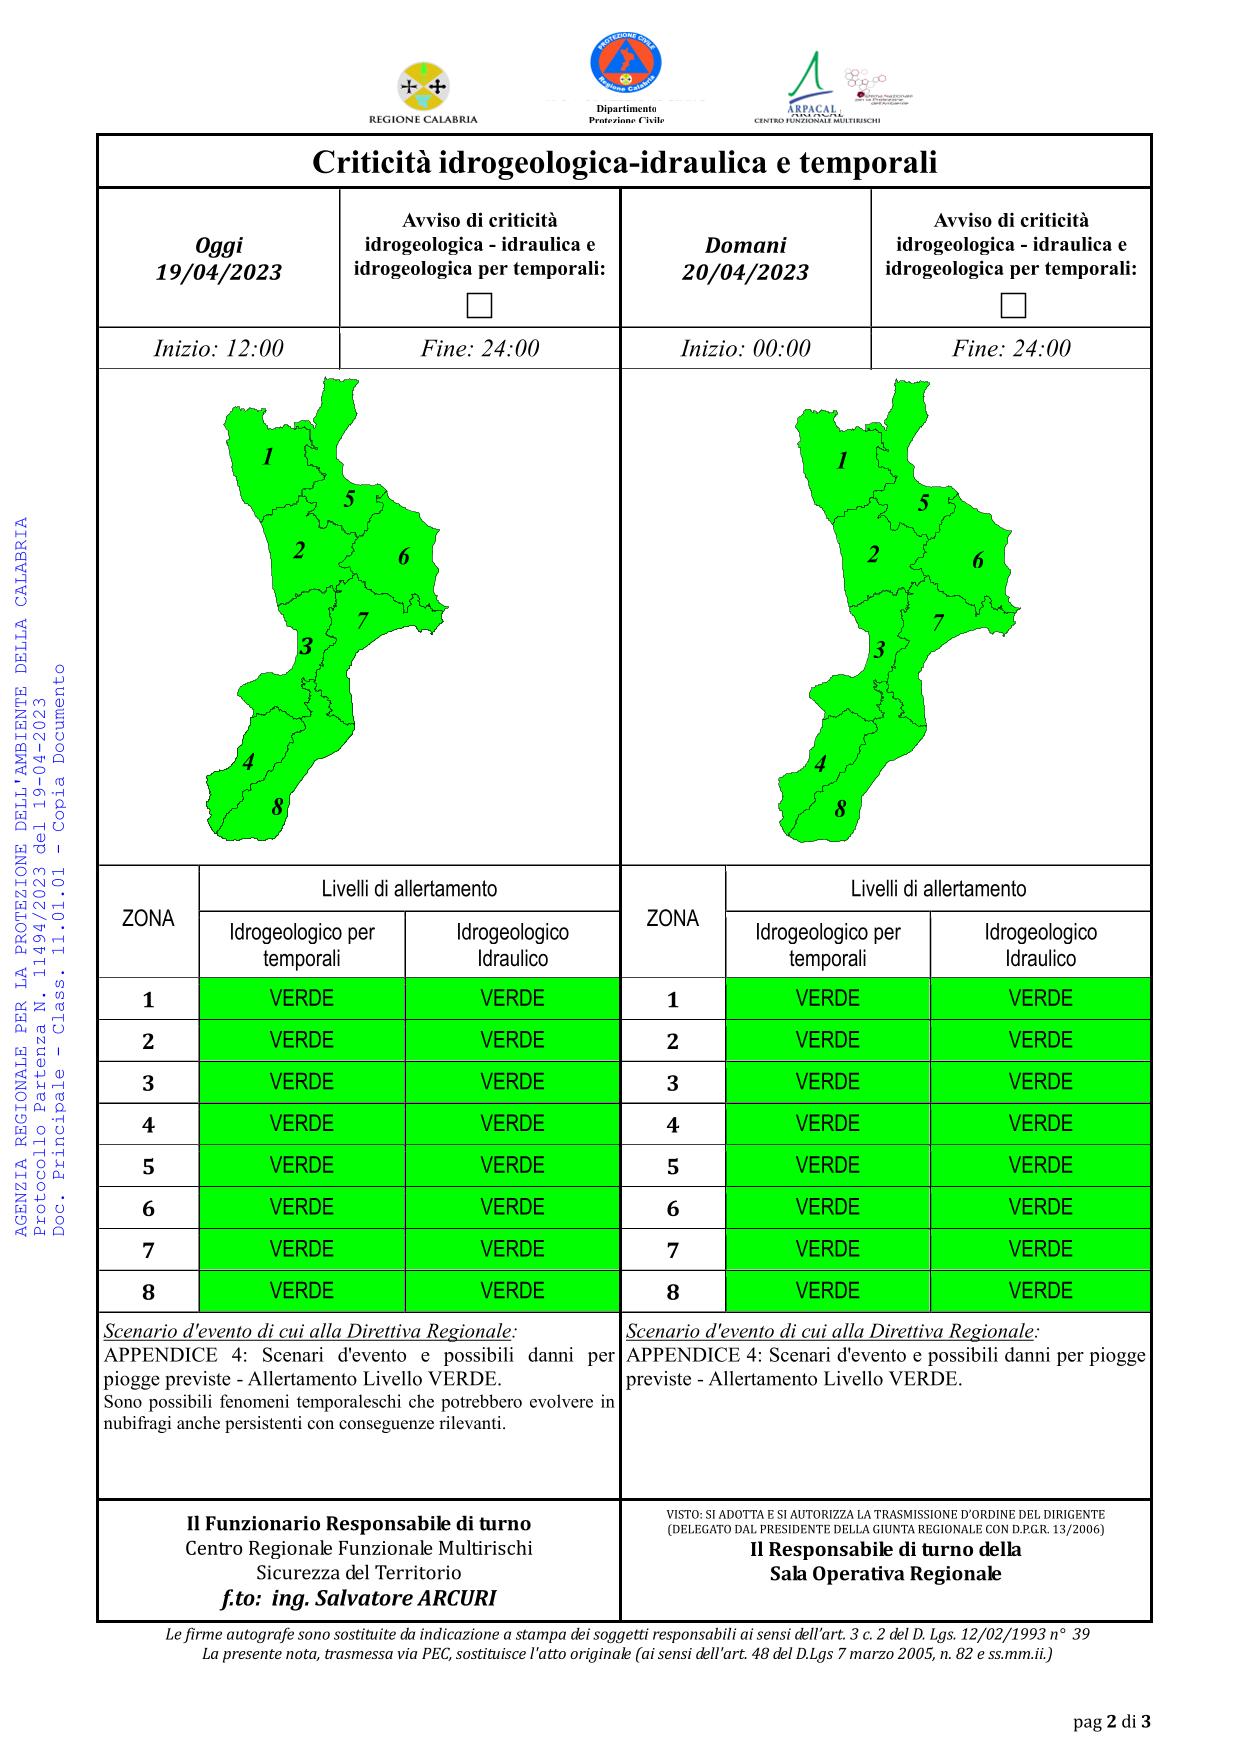 Criticità idrogeologica-idraulica e temporali in Calabria 19-04-2023